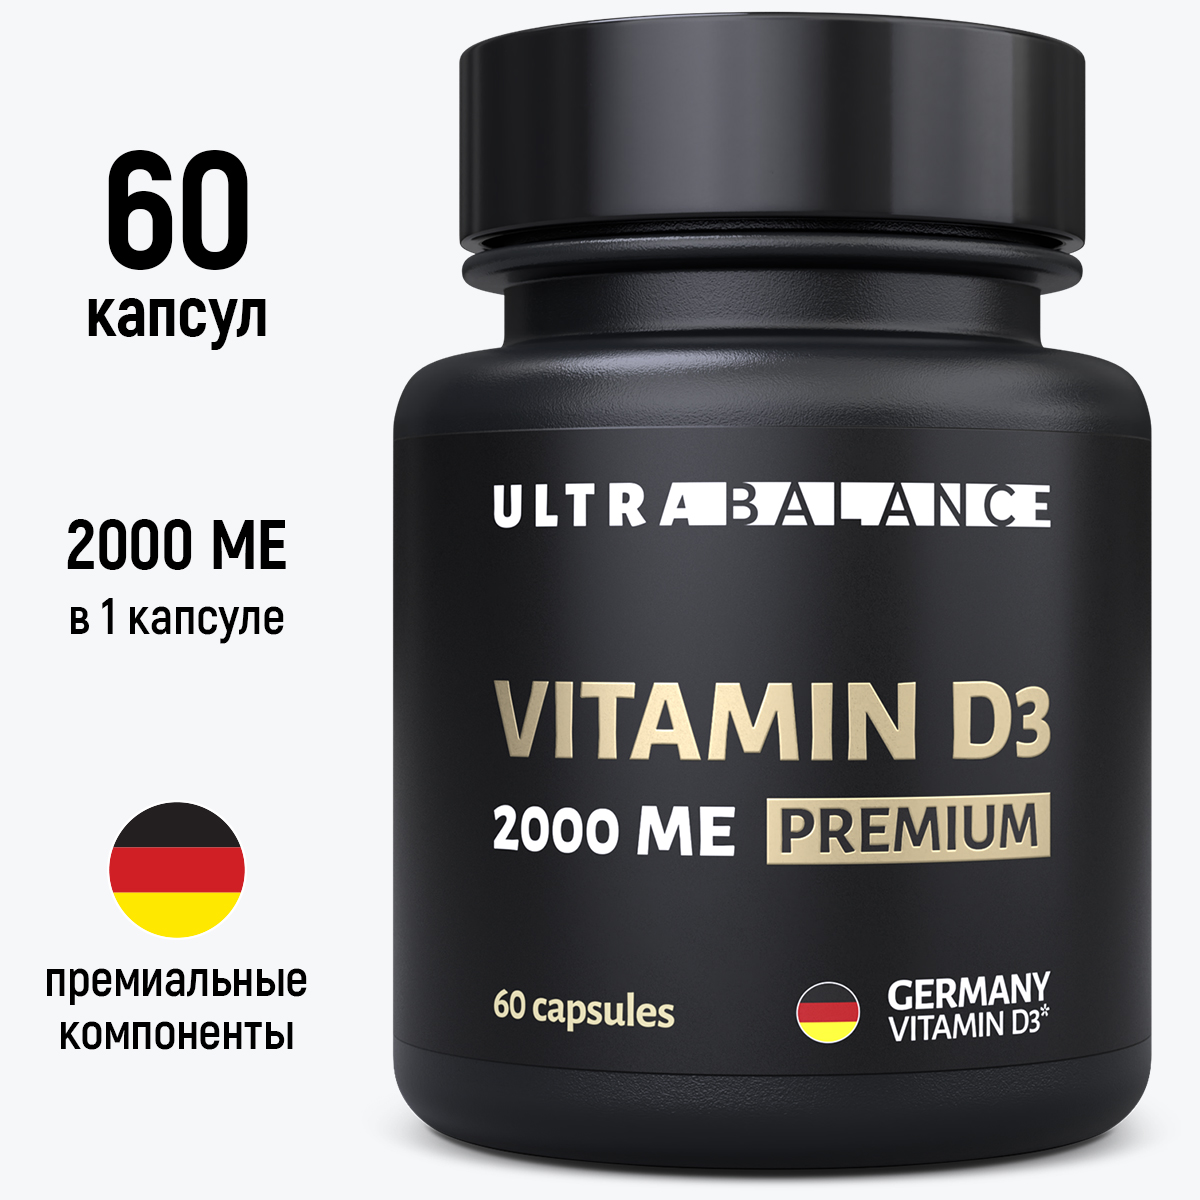 Витамин D3 UltraBalance Premium 2000 ME капсулы 60 шт.